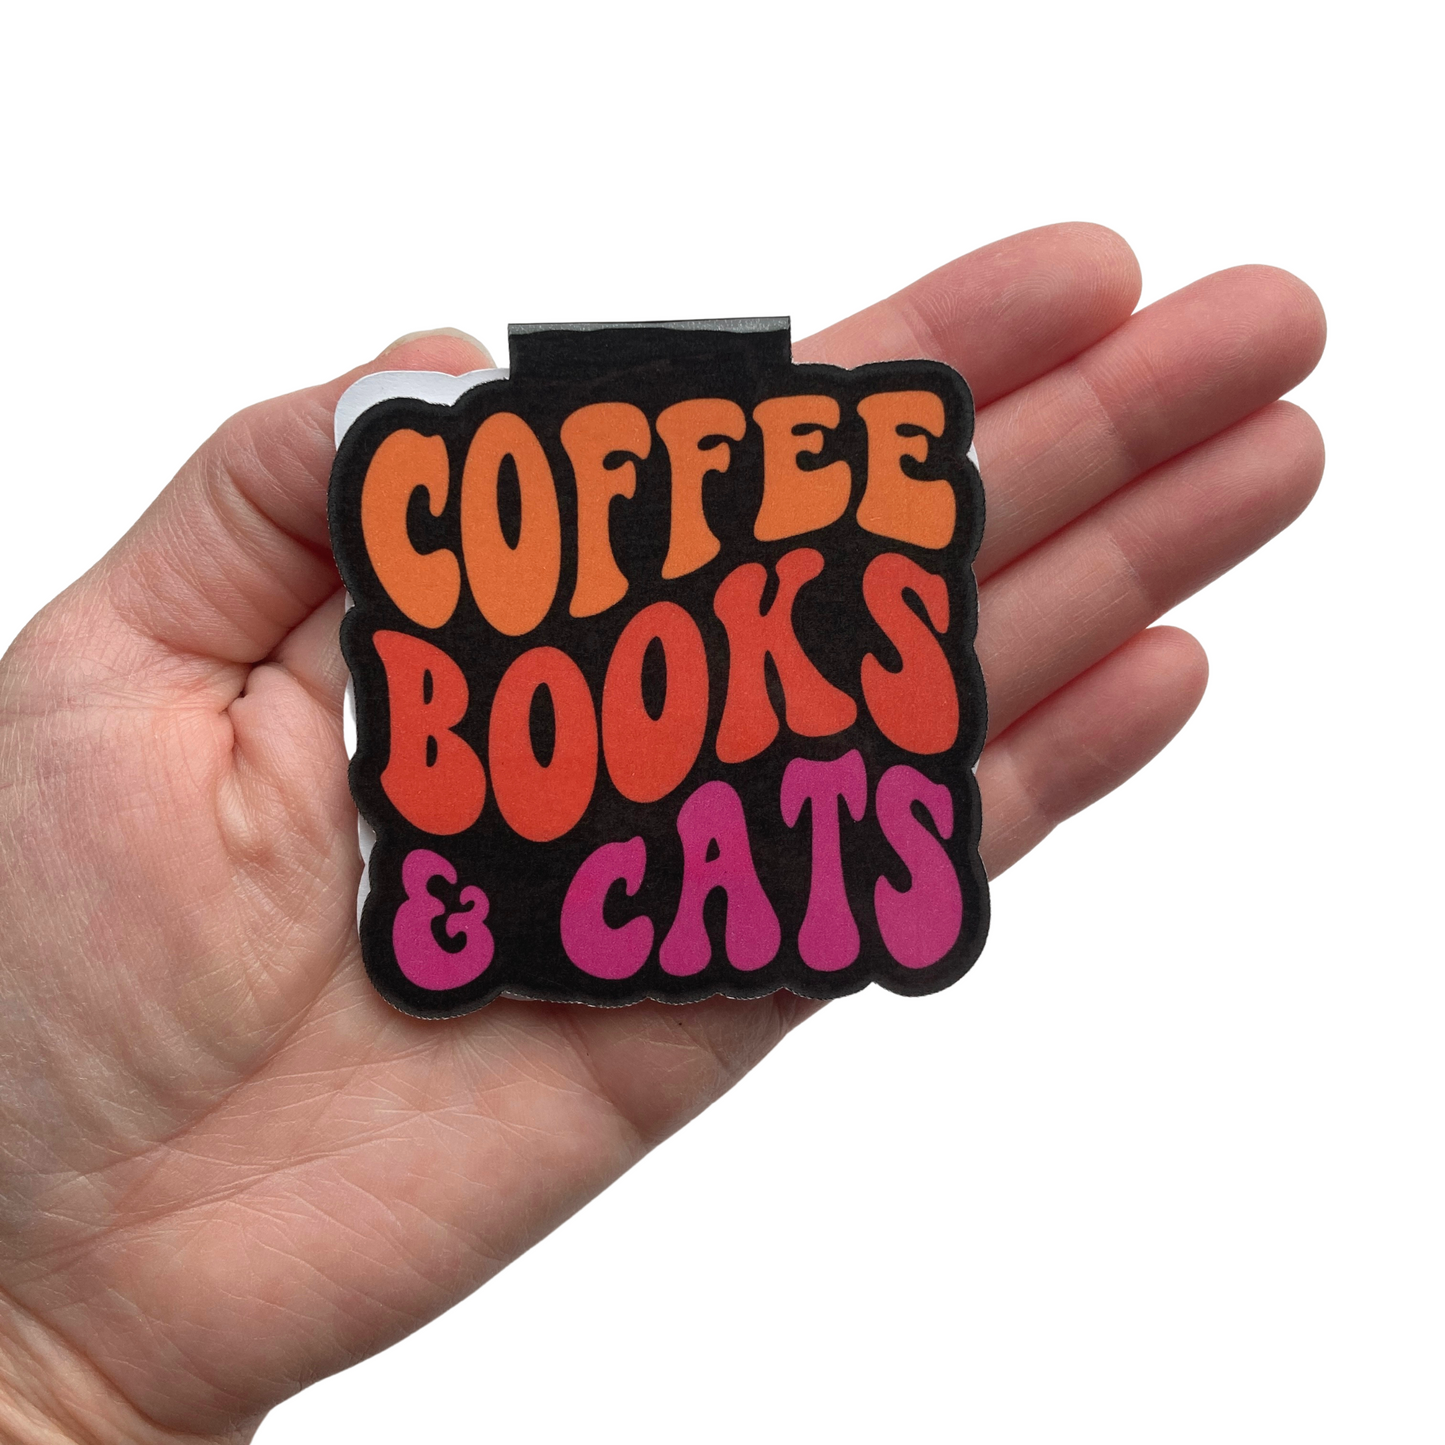 Coffee Books & Cats Bookmark